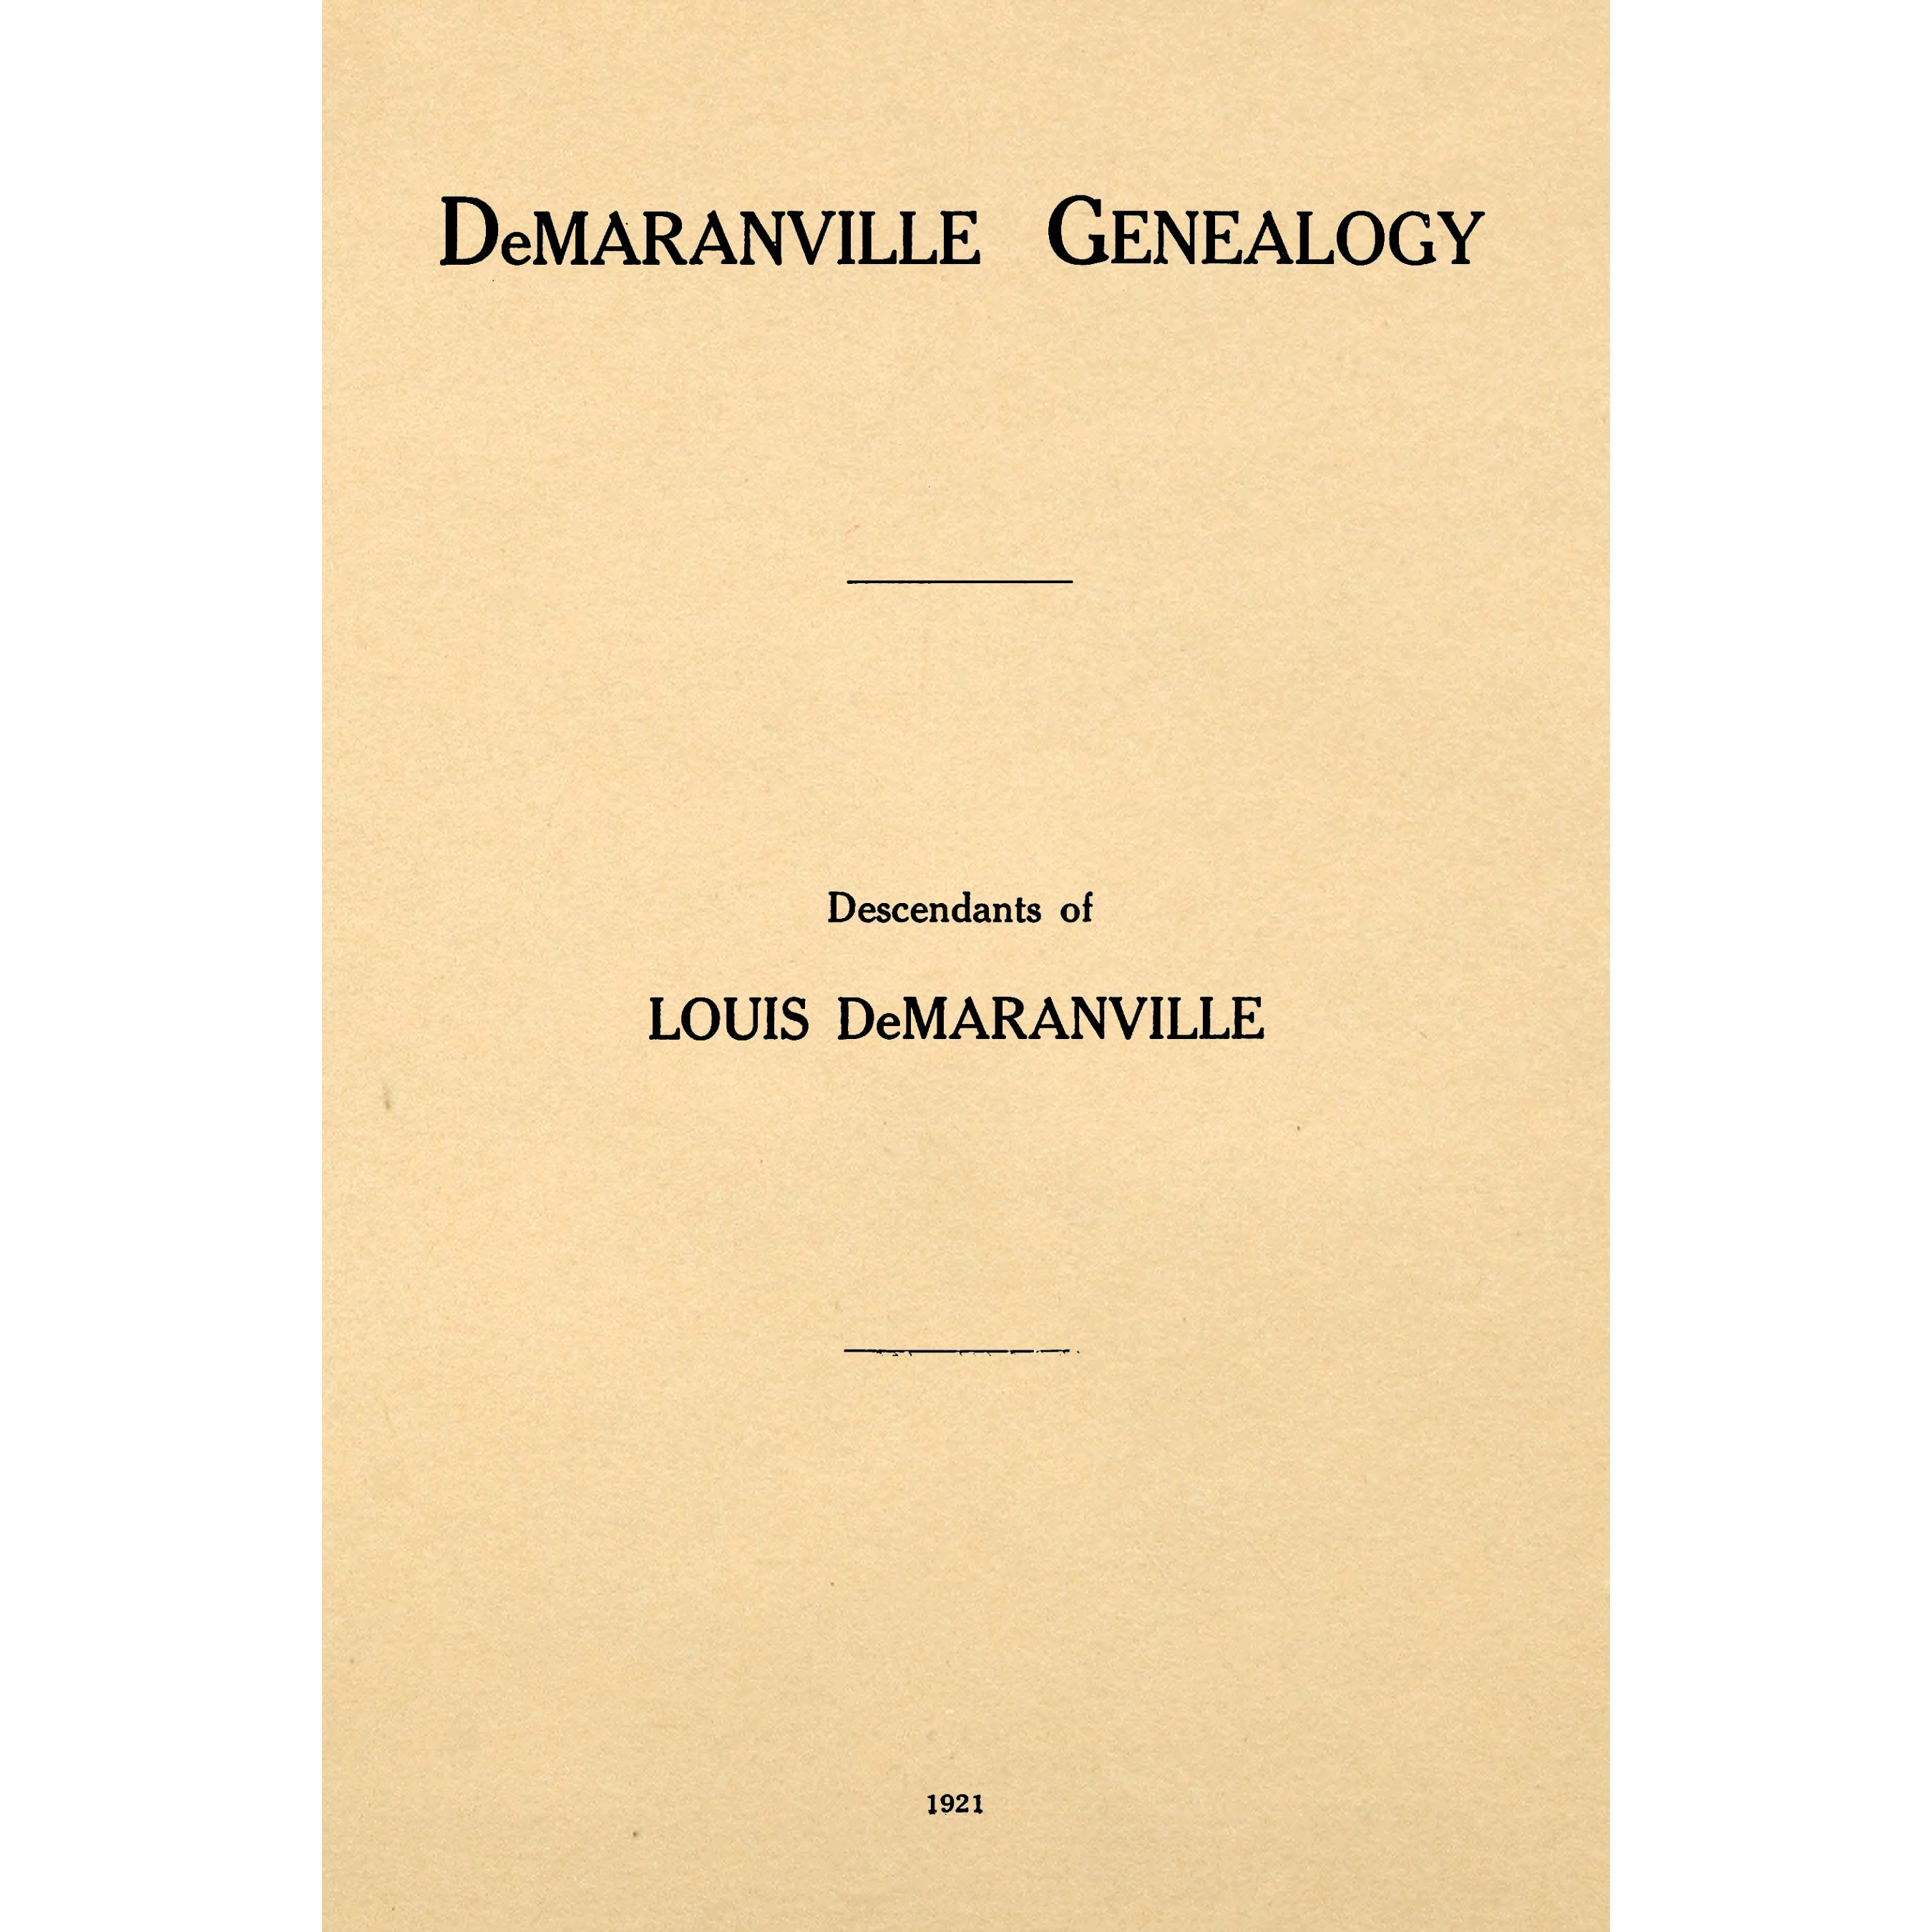 DeMaranville genealogy: descendants of Louis DeMaranville